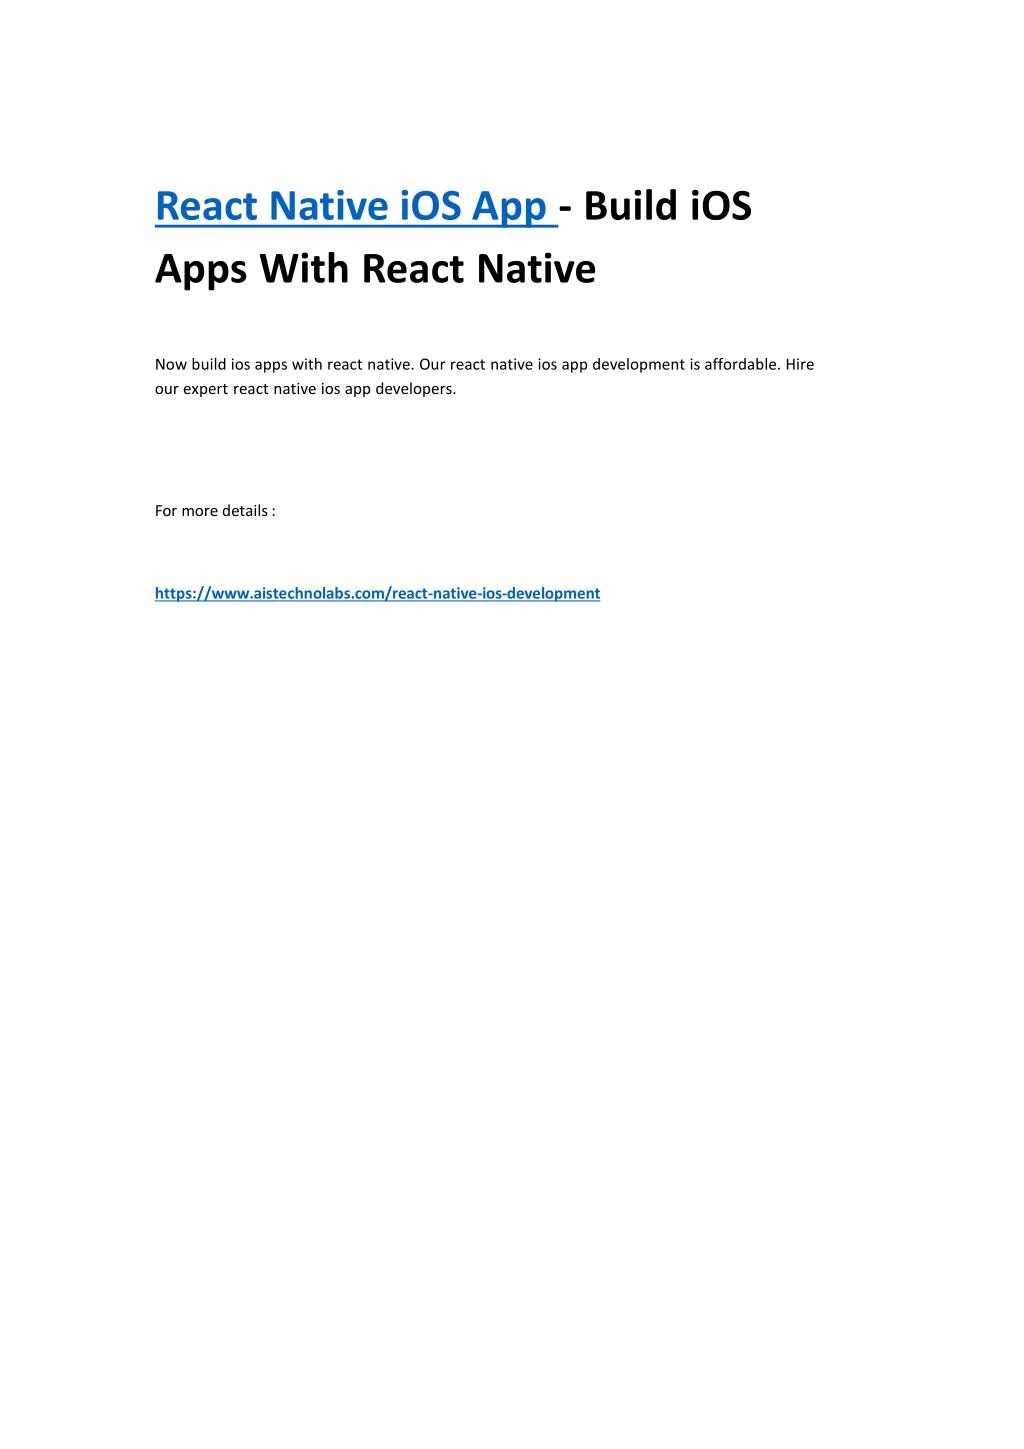 PPT - React Native iOS App - Build iOS Apps With React ...